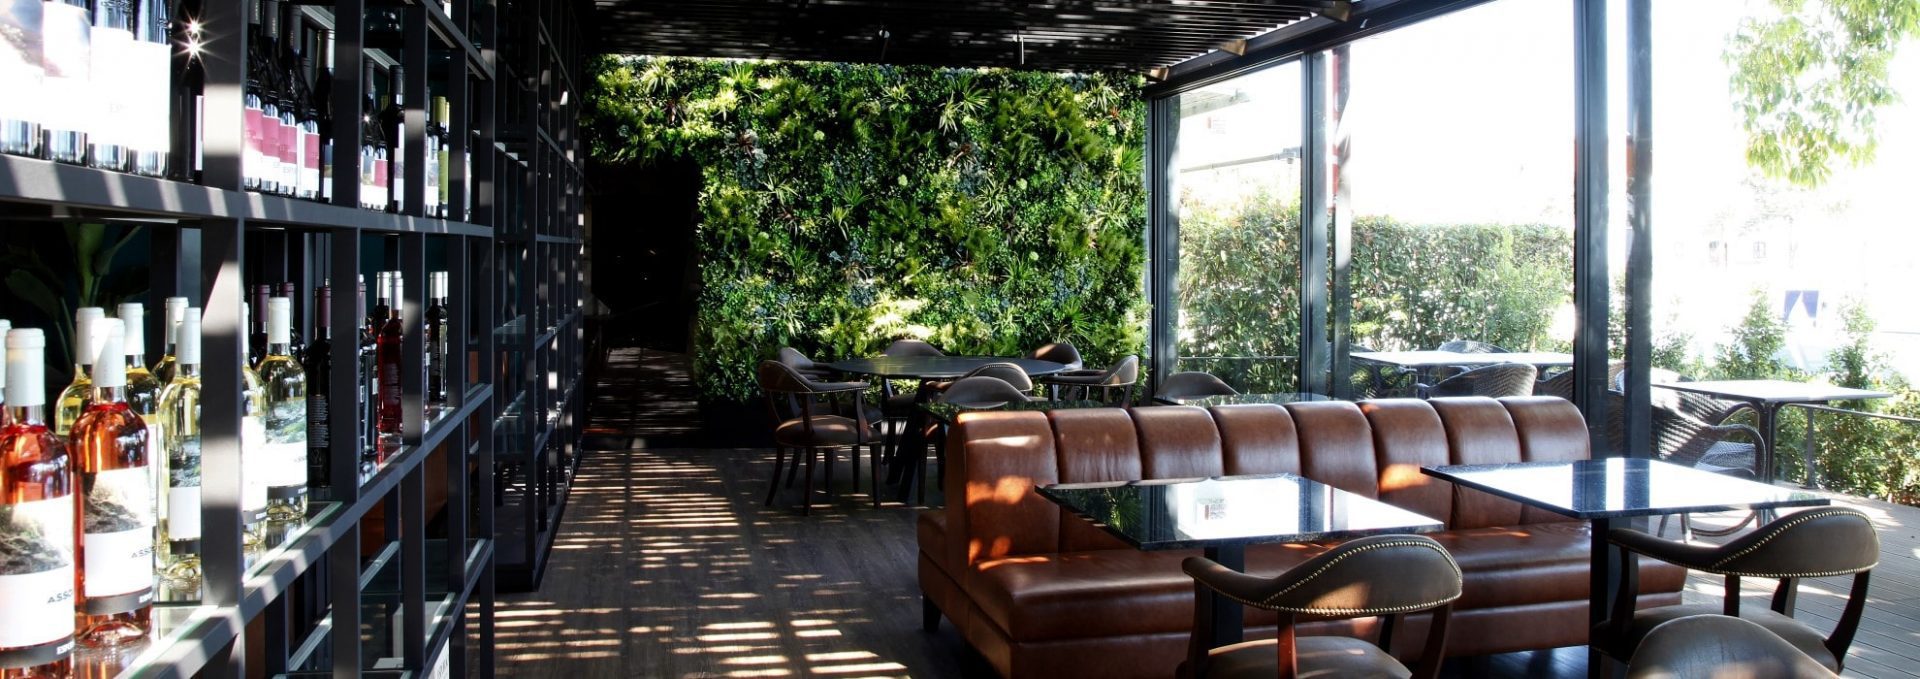 Restaurant Interior green wall Design